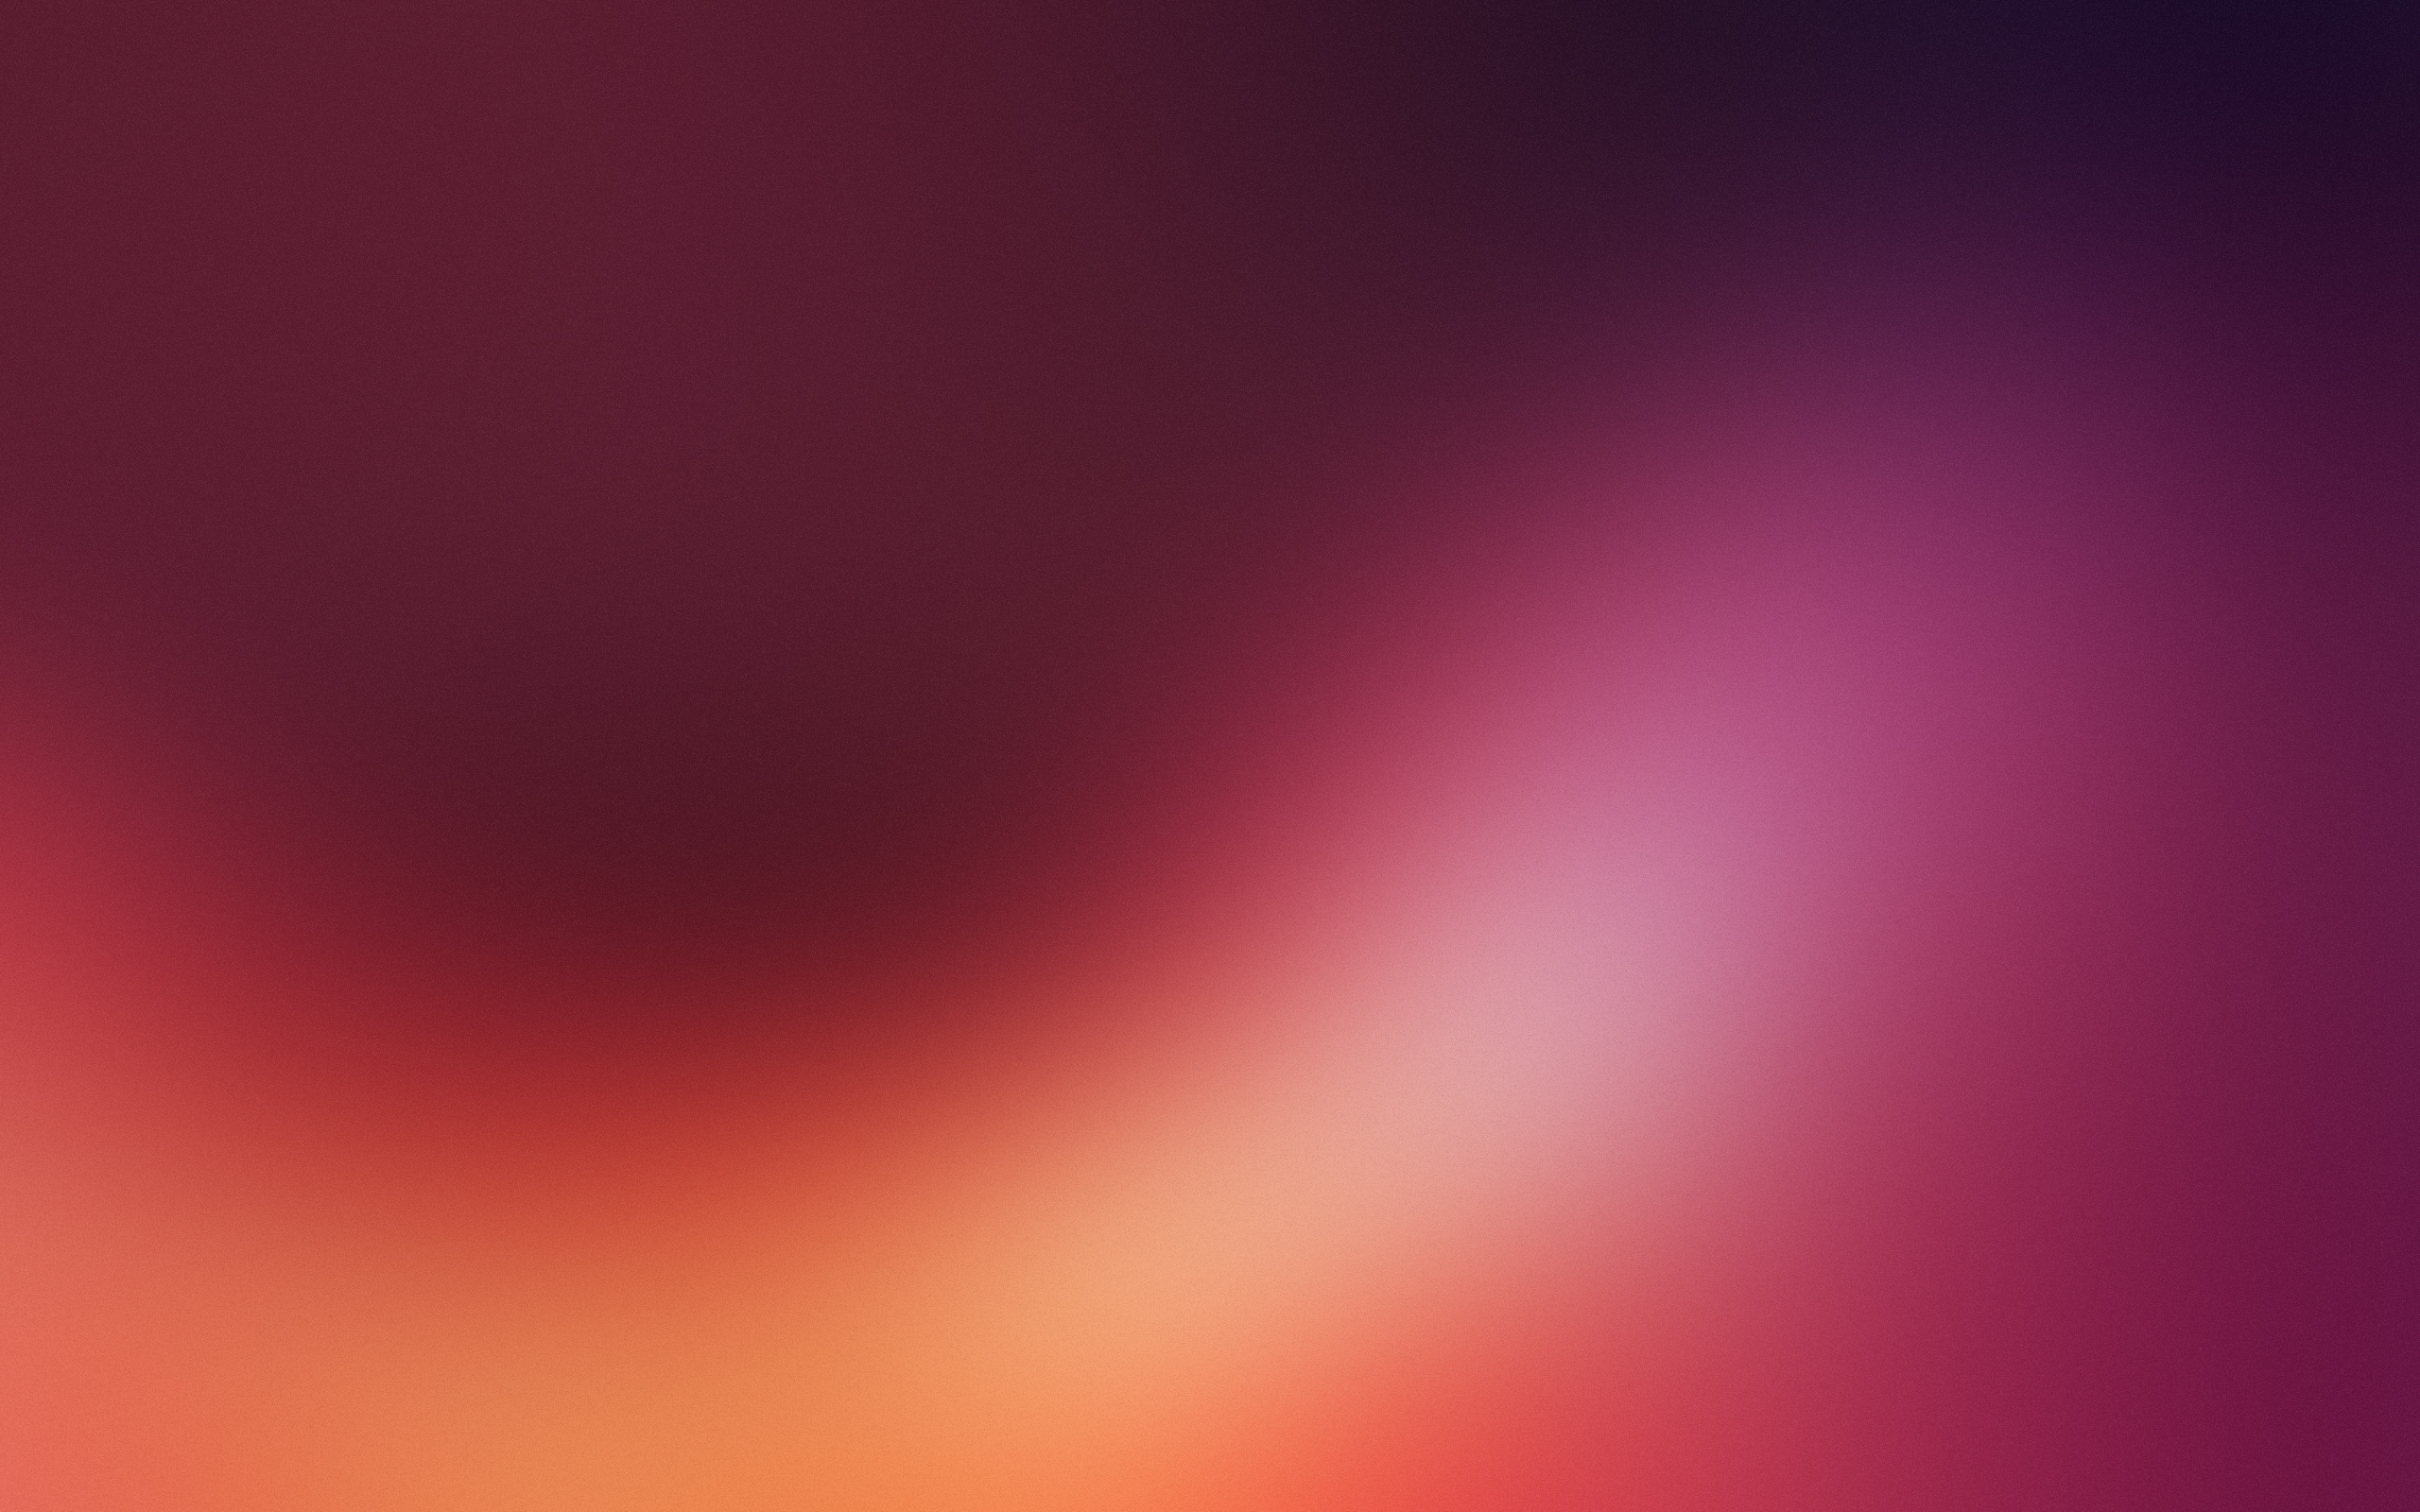 ubuntuの壁紙,空,赤,ピンク,紫の,青い